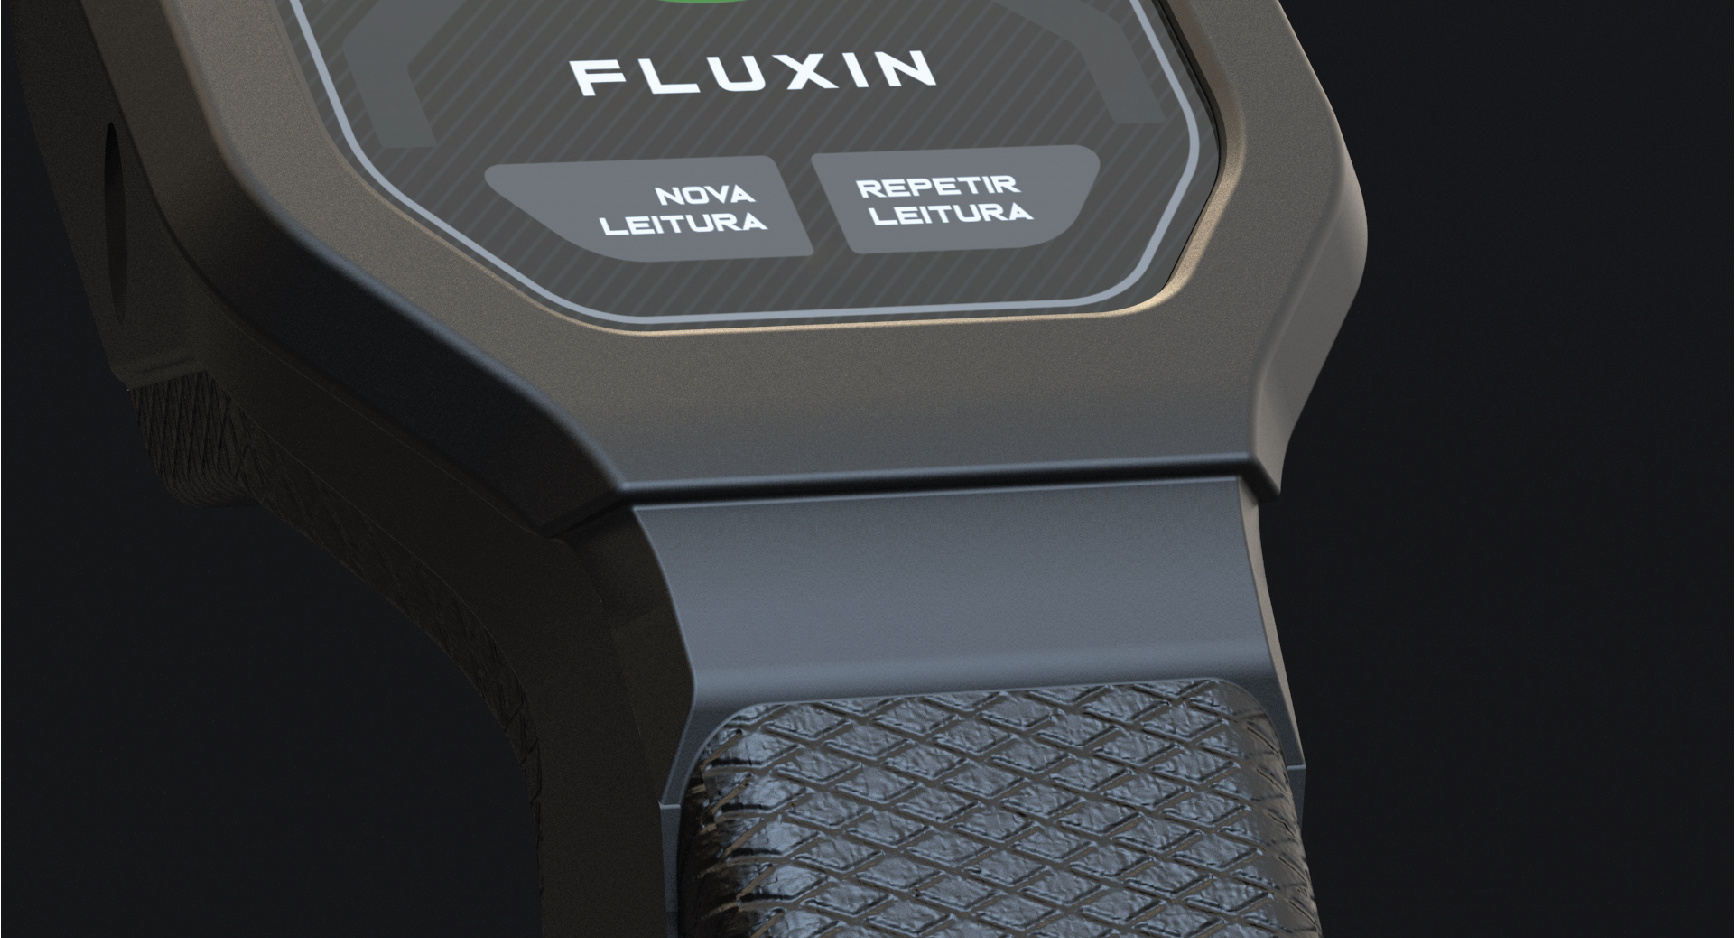 New Fluxin - Detalhe textura